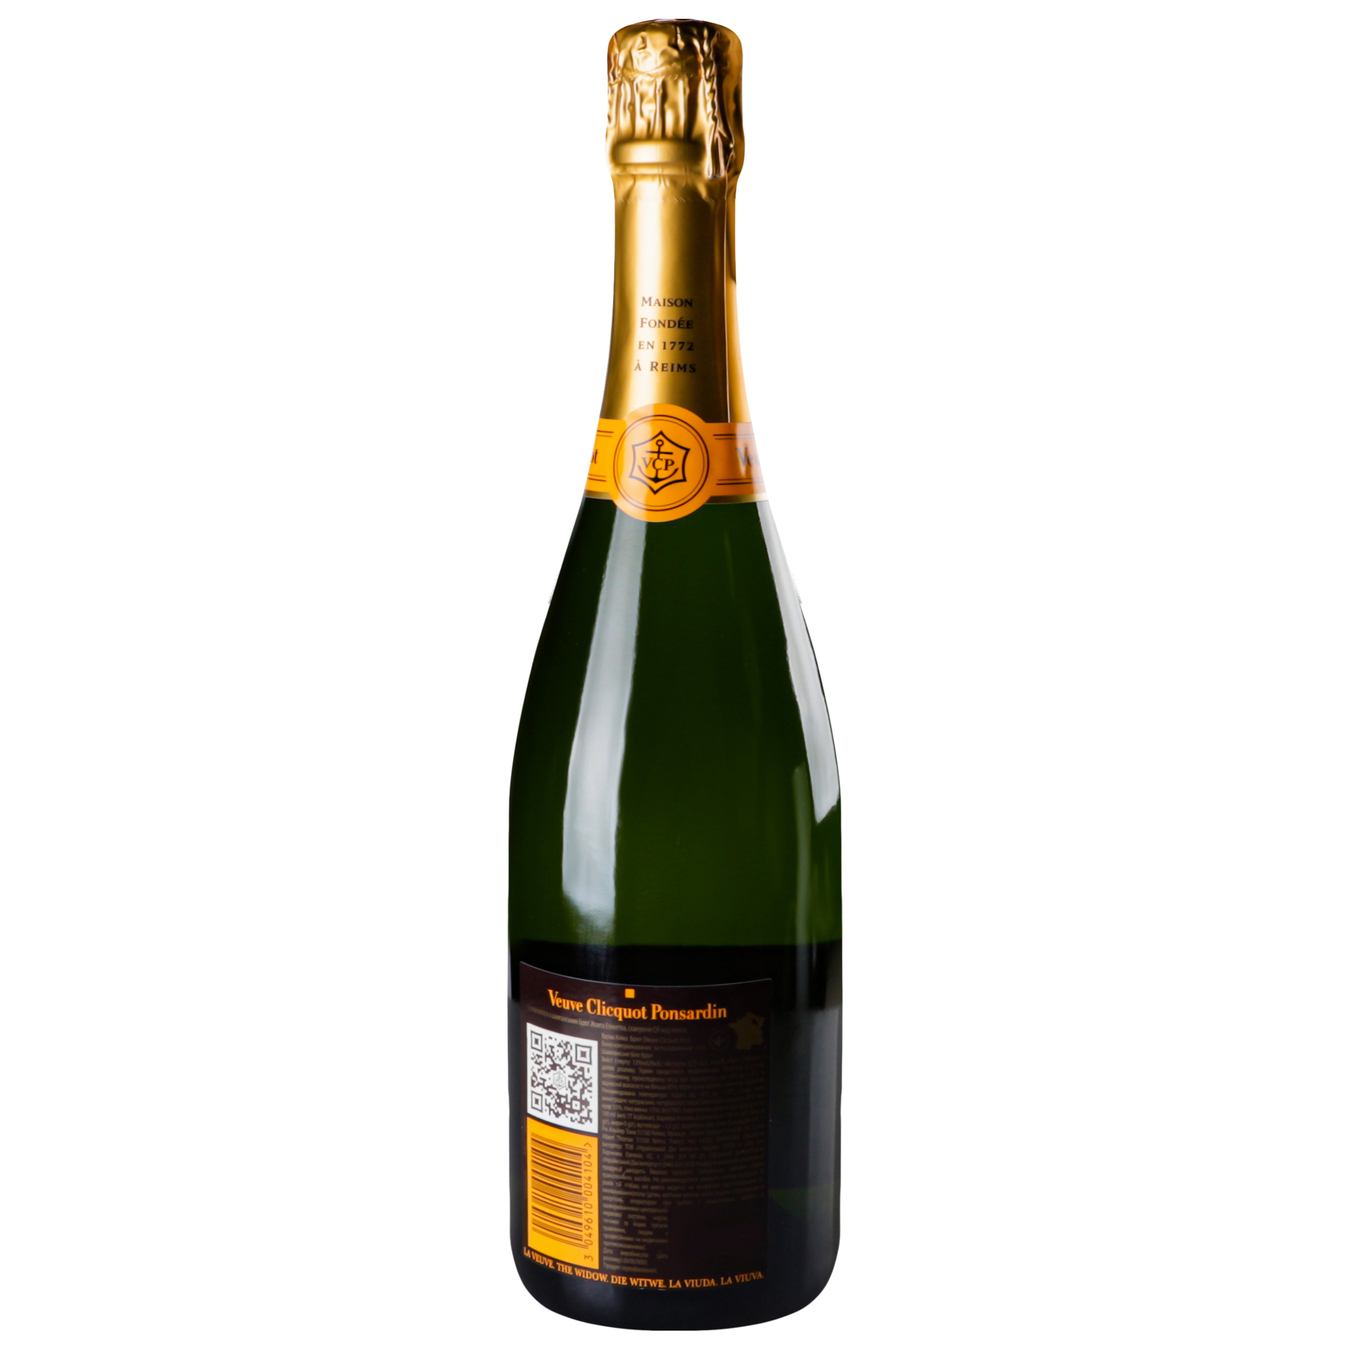 Veuve Cliquot Brut white dry champagne 12% 0,75l 4